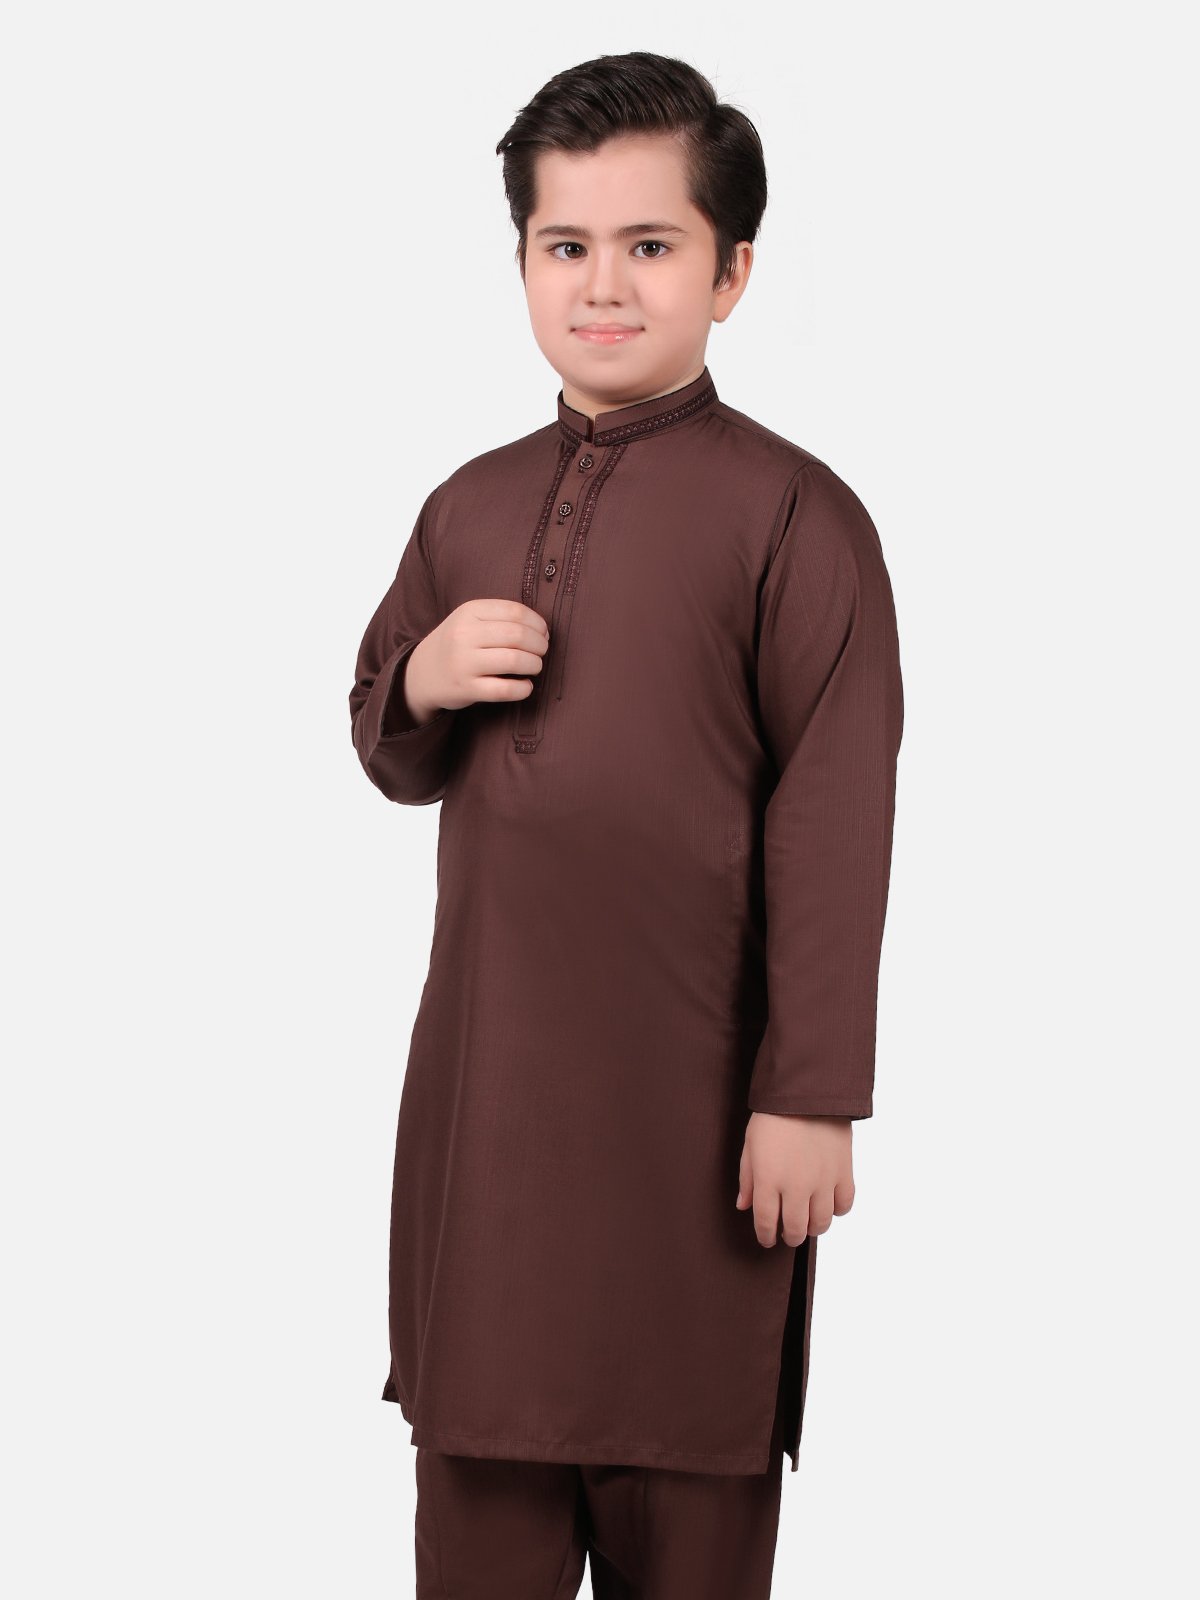 Boy's Brown Kurta Shalwar - EBTKS19-3603